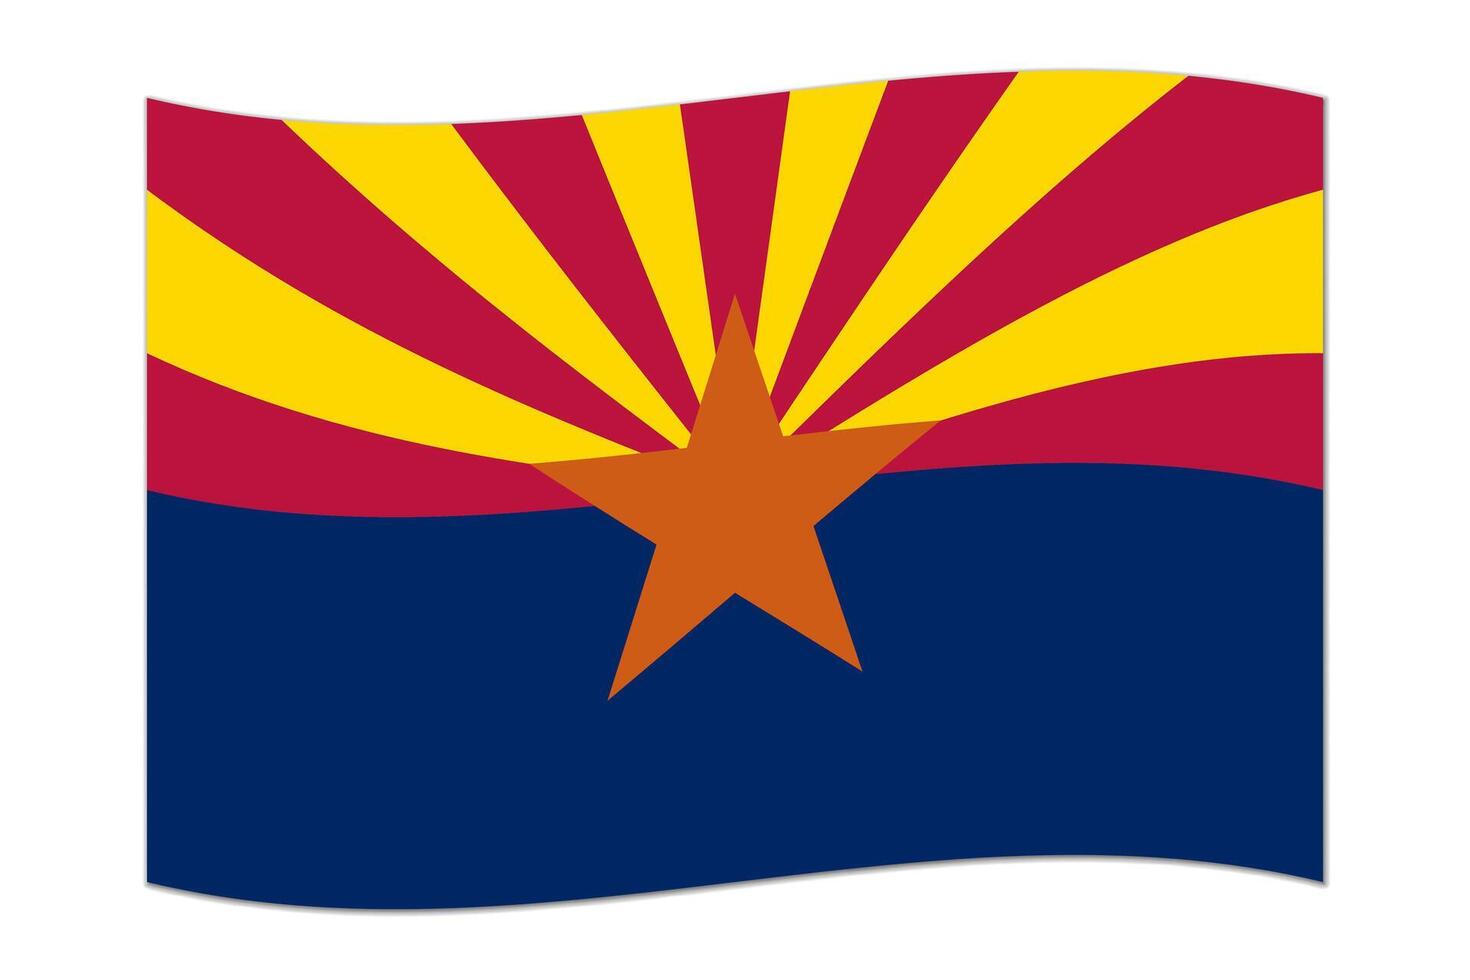 vinka flagga av de arizona stat. vektor illustration.